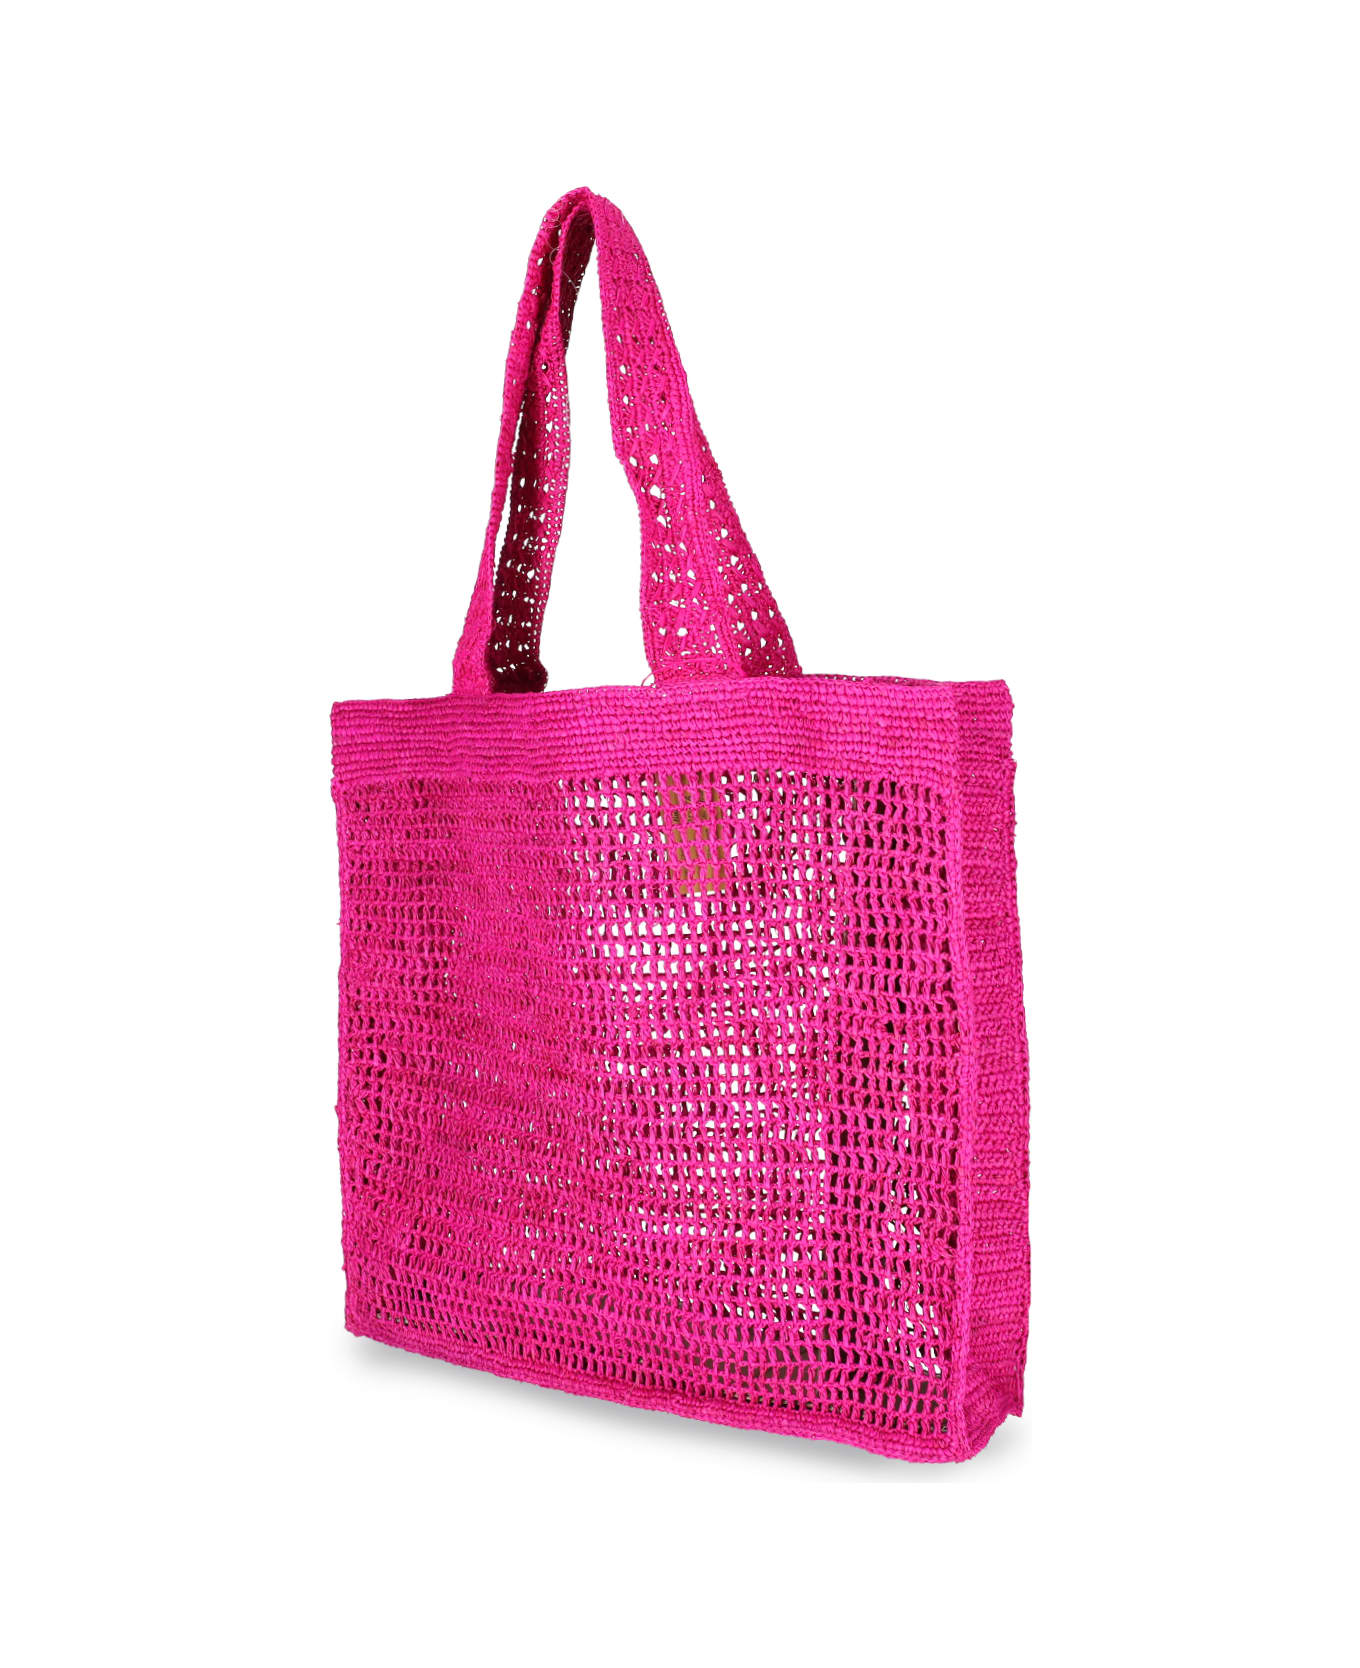 Ibeliv 'bevata' Tote Bag - Pink